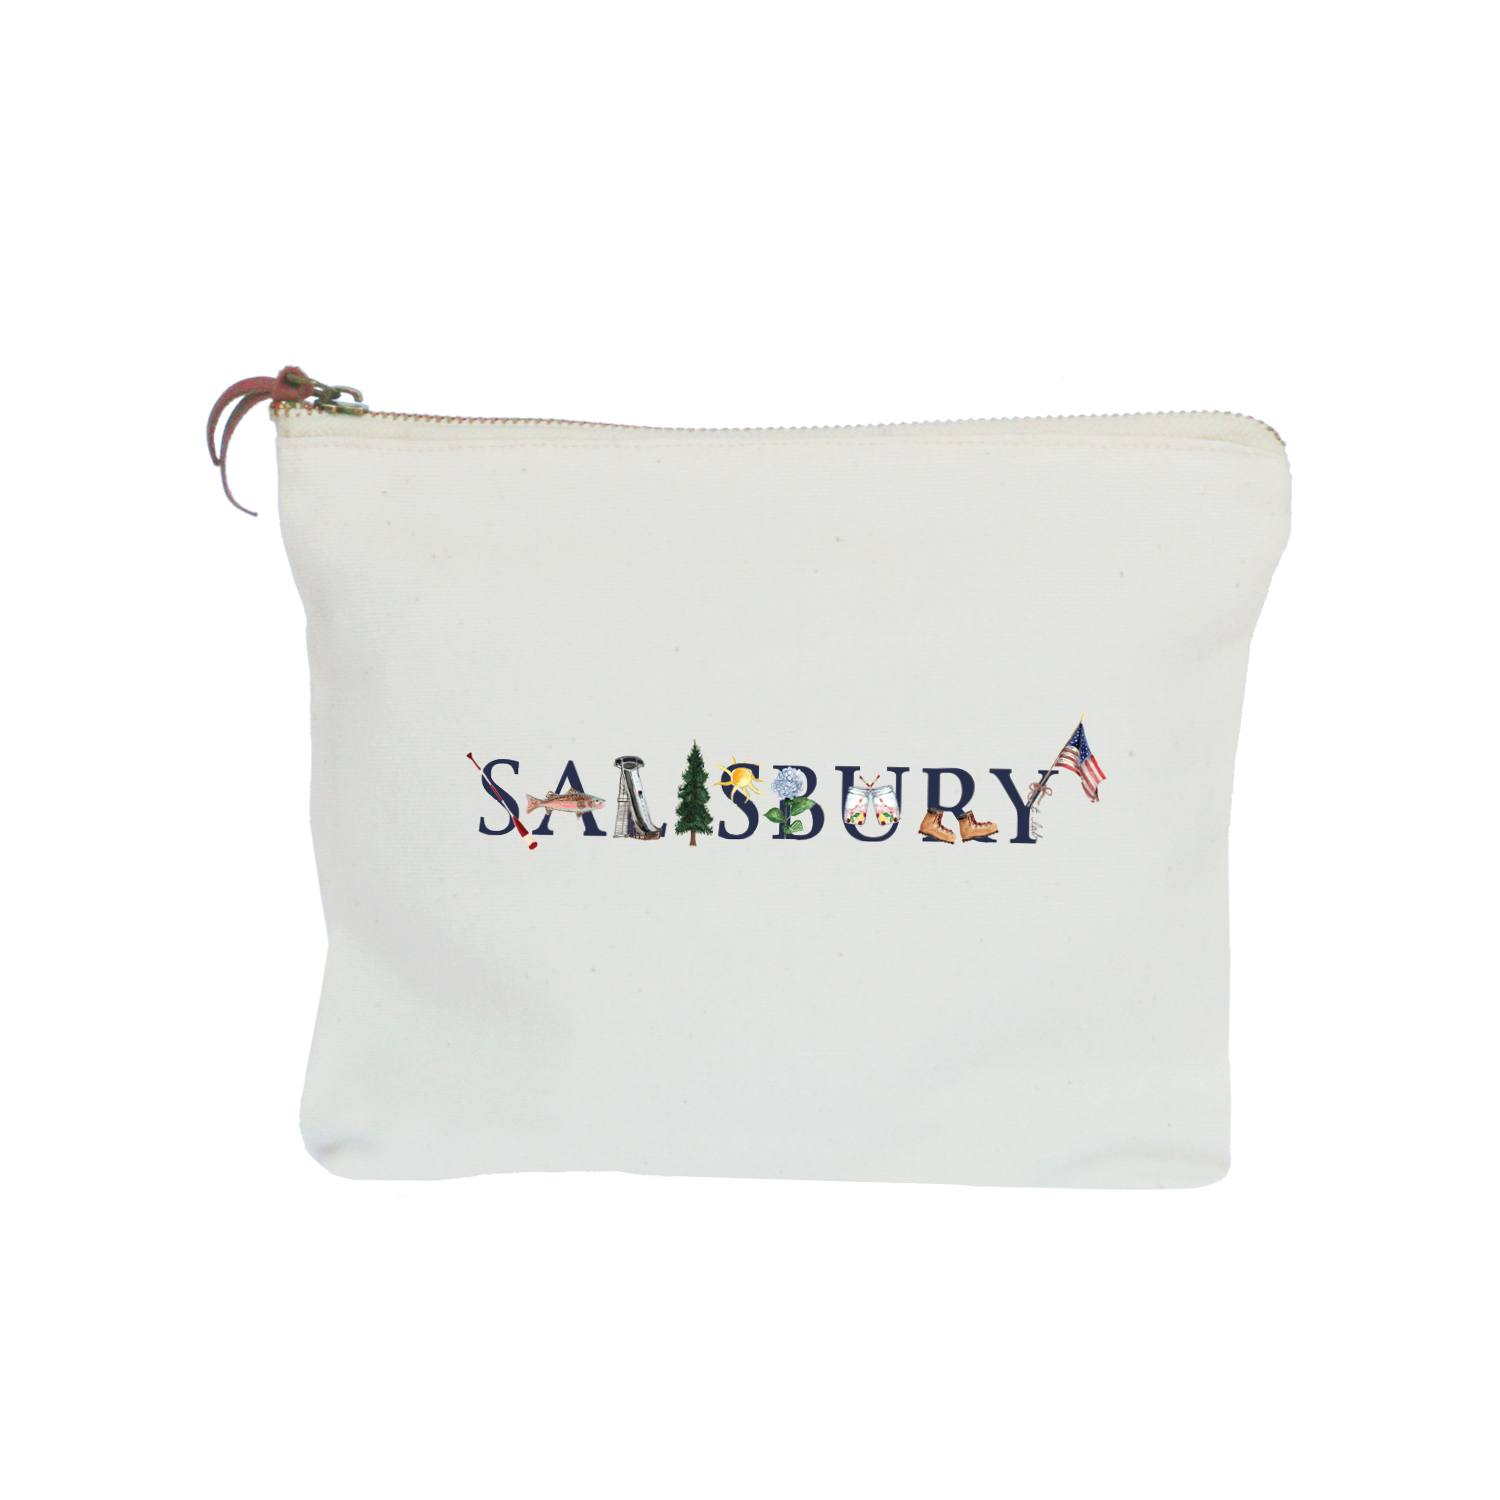 salisbury zipper pouch